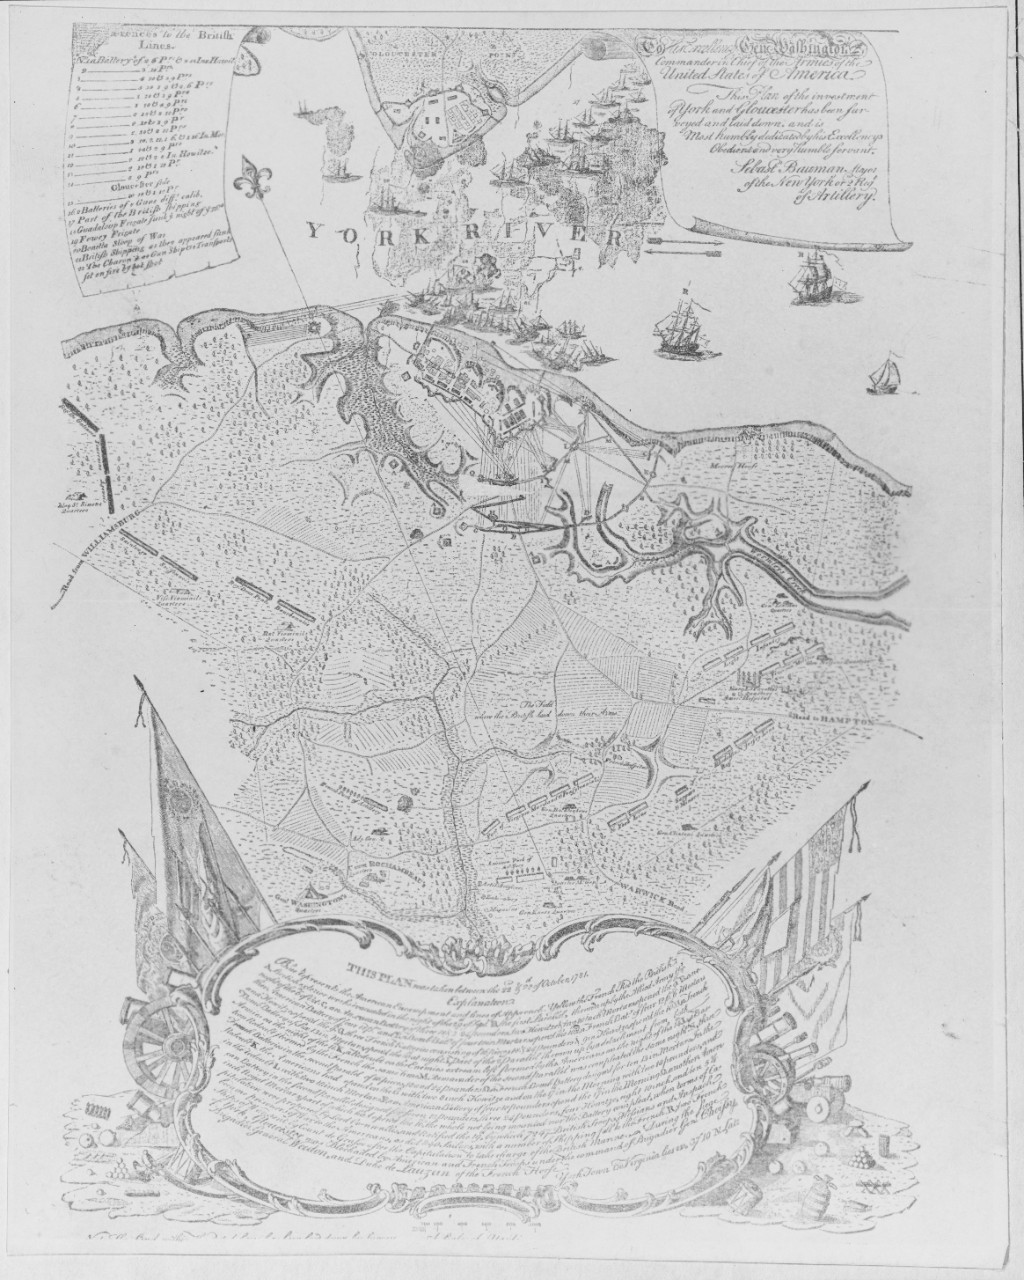 Yorktown, Plan and Map of York River, Gloucester, October 22-23, 1781